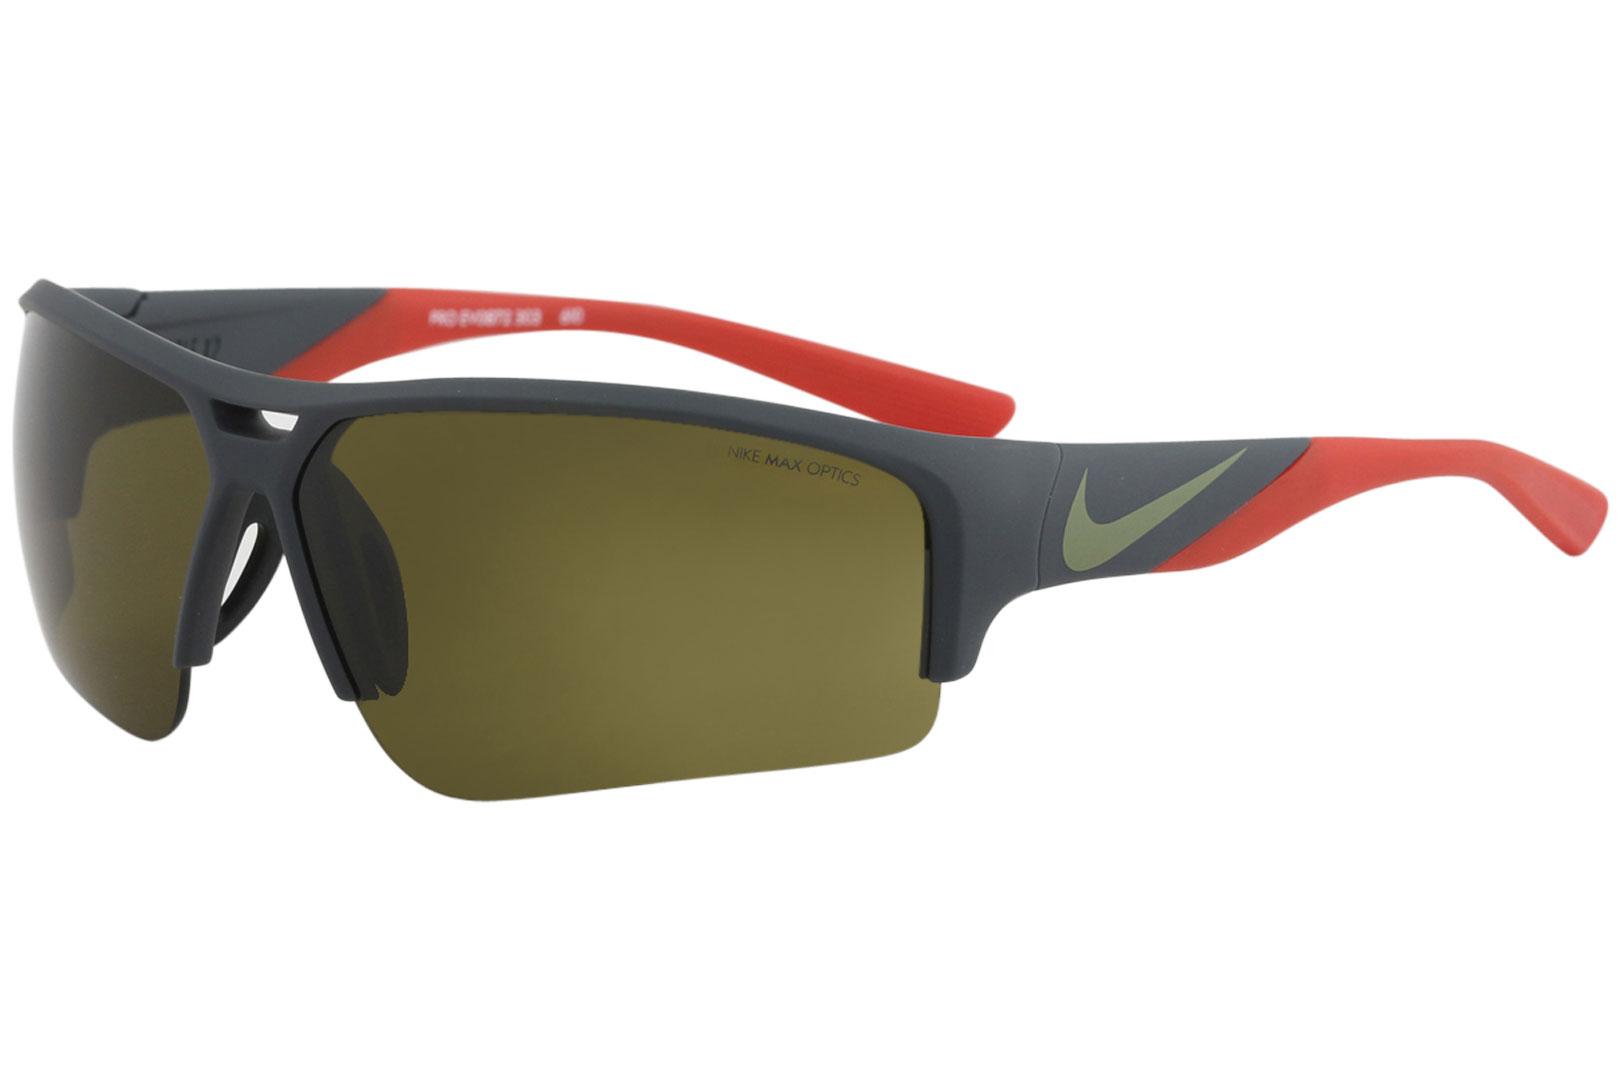 Men's  EV0872 EV/0872 Rectangular Sunglasses - Matte Green/Yellow   303 - Lens 74 Bridge 11mm - Nike Golf X2 Pro